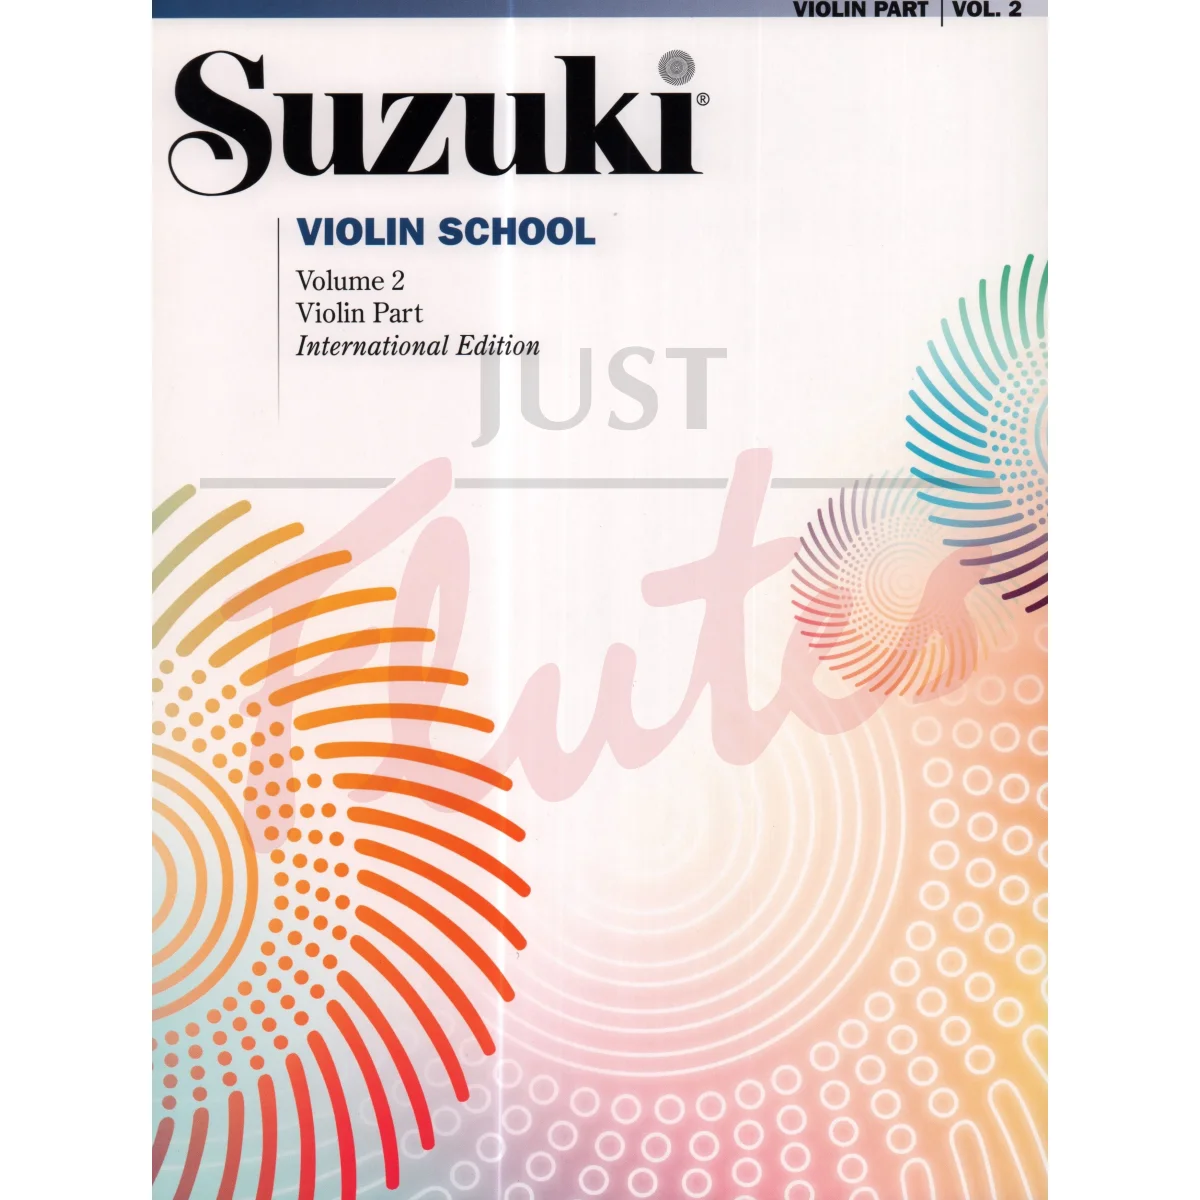 Suzuki Violin School Vol 2 (International Edition) [Violin Part]